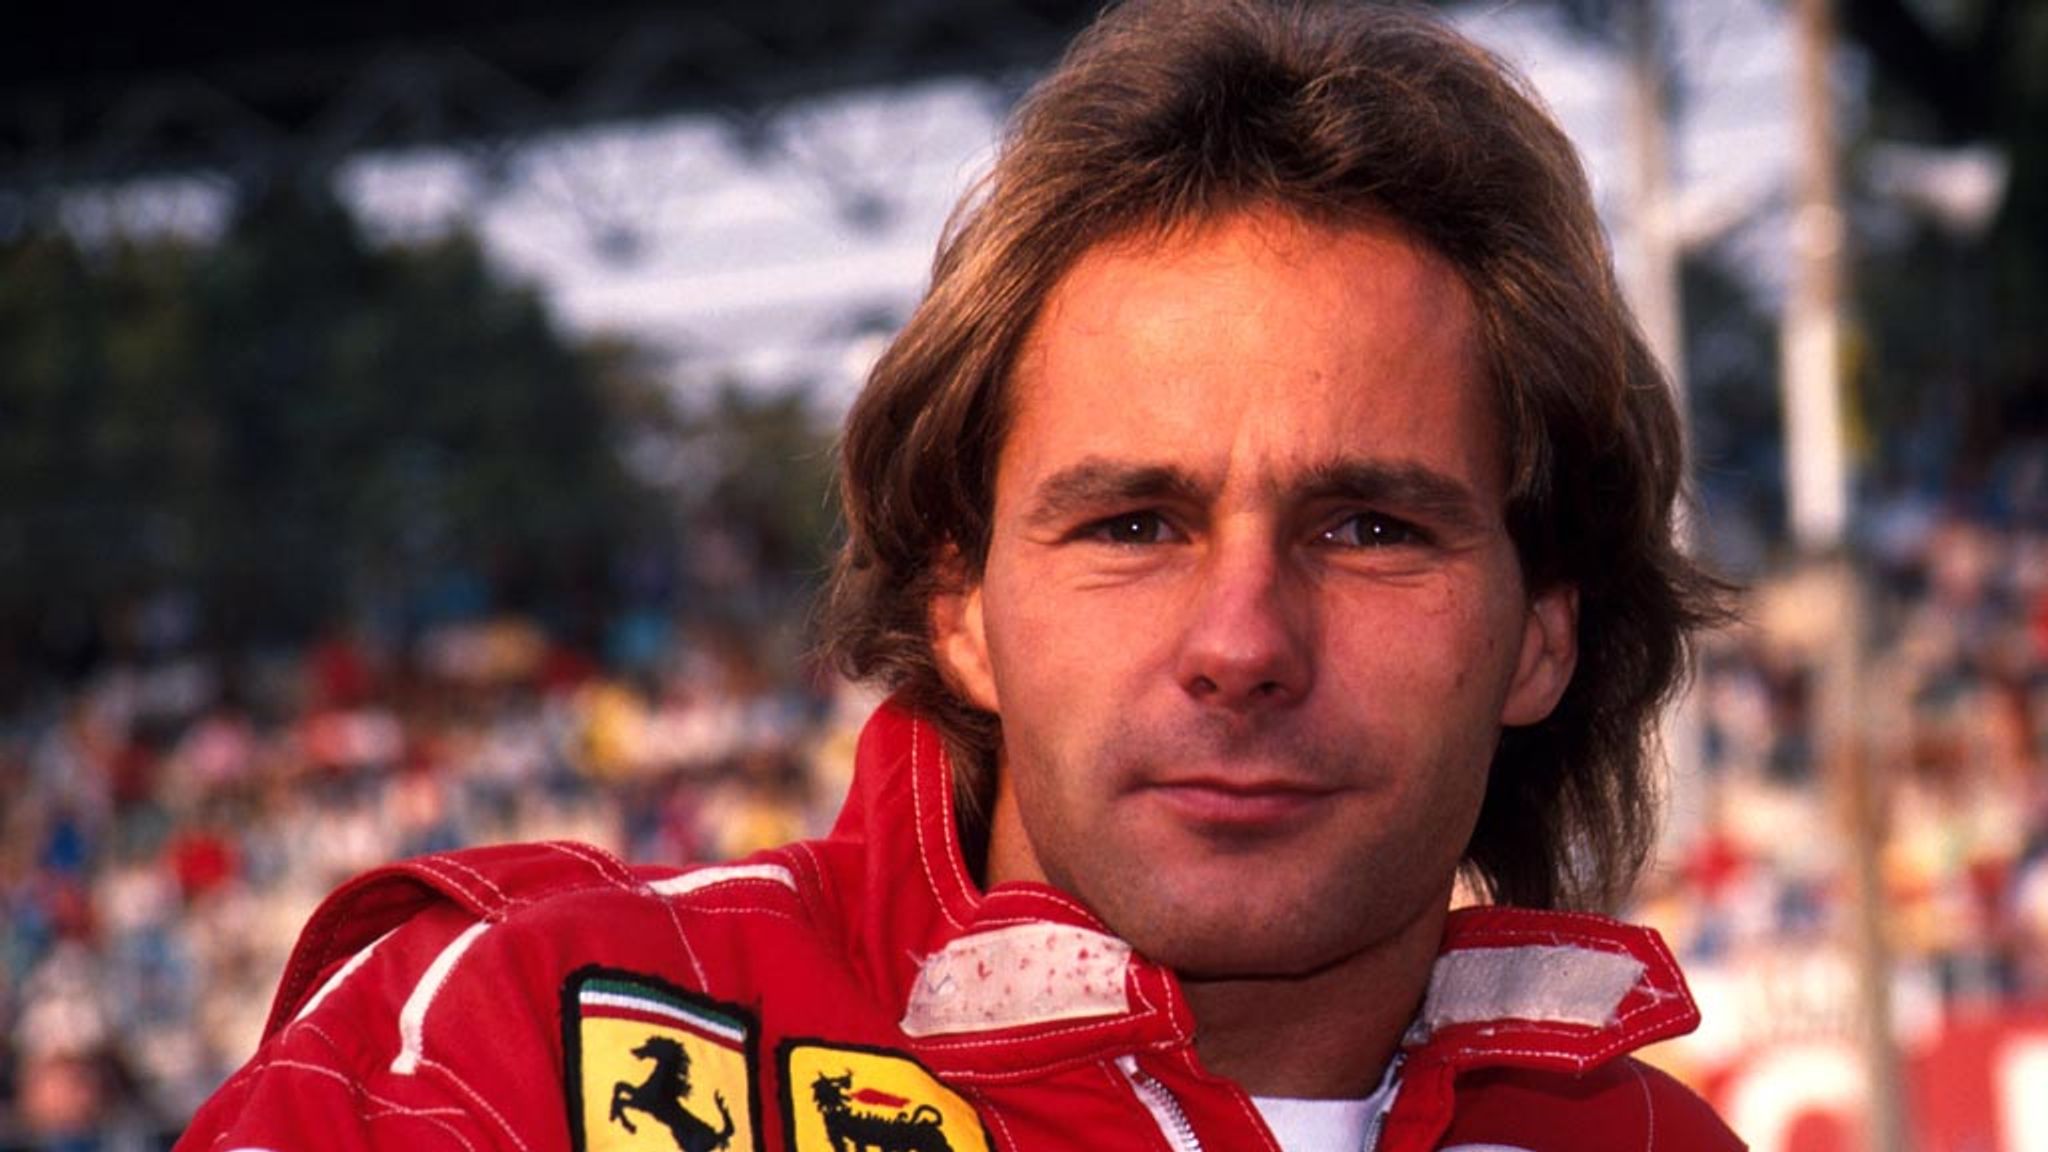 Manchuriet forbi lyse F1 Legends - Gerhard Berger | F1 News